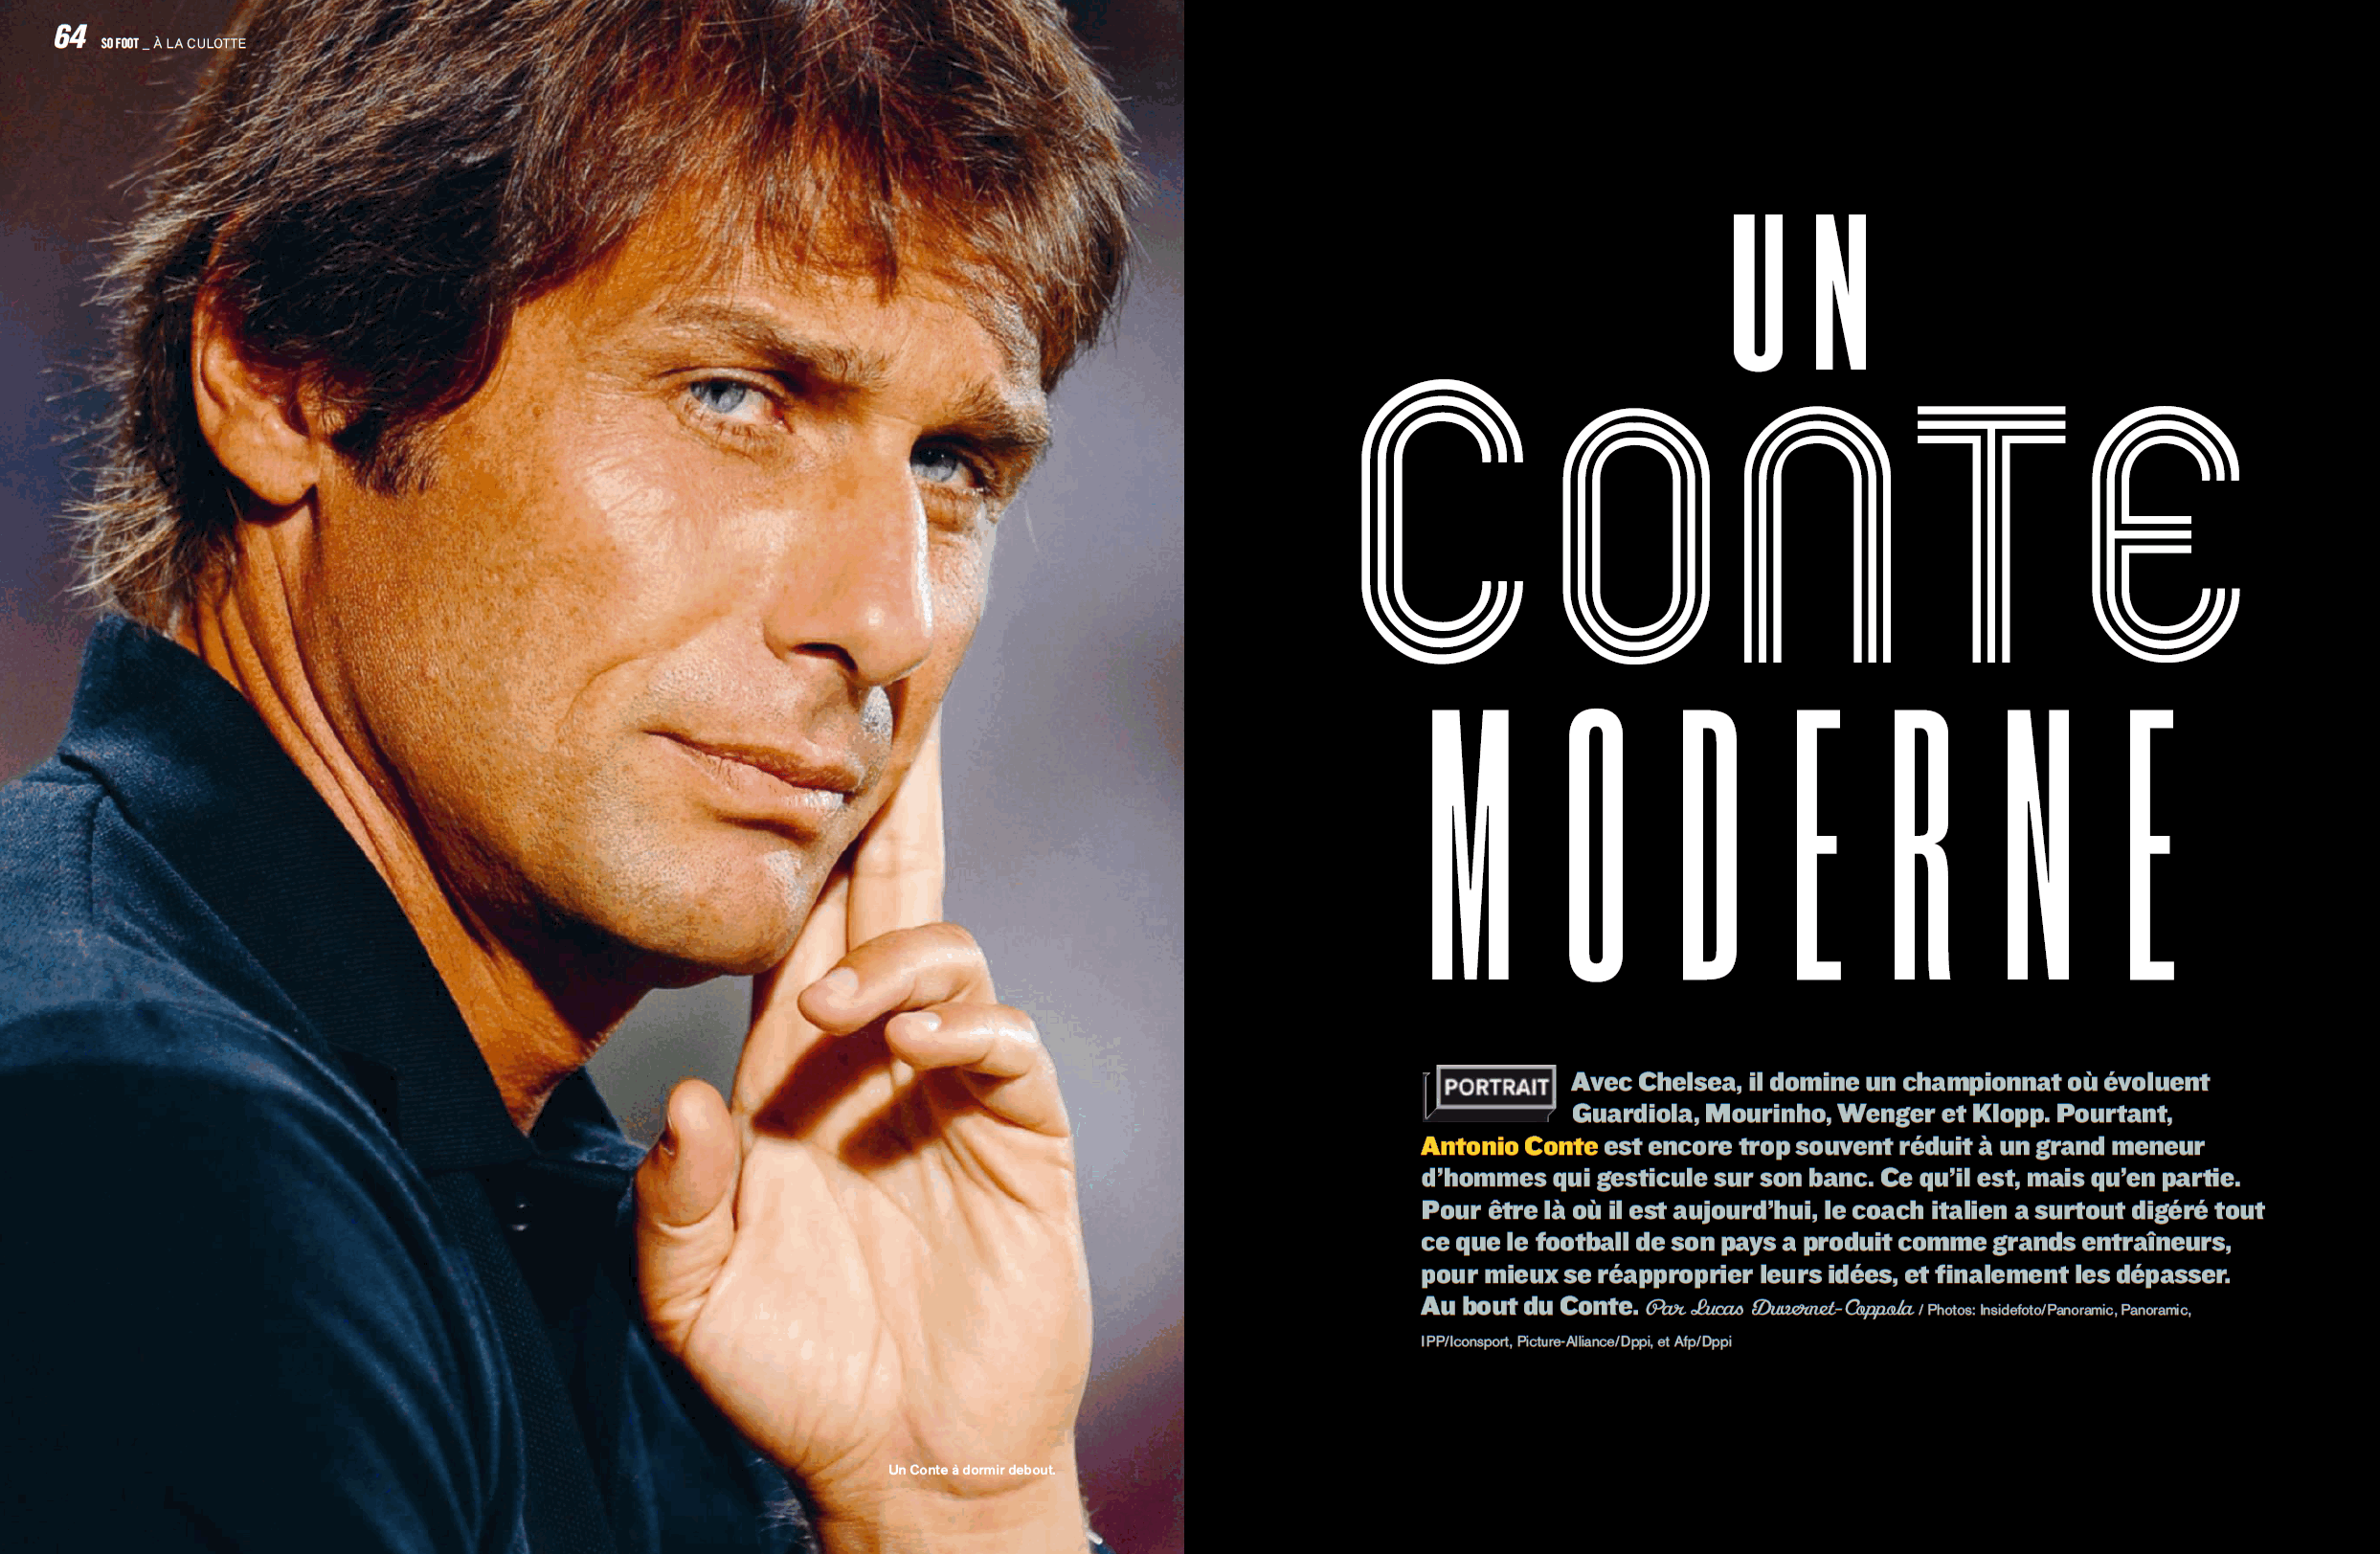 Antonio Conte – The Man with the Master Plan